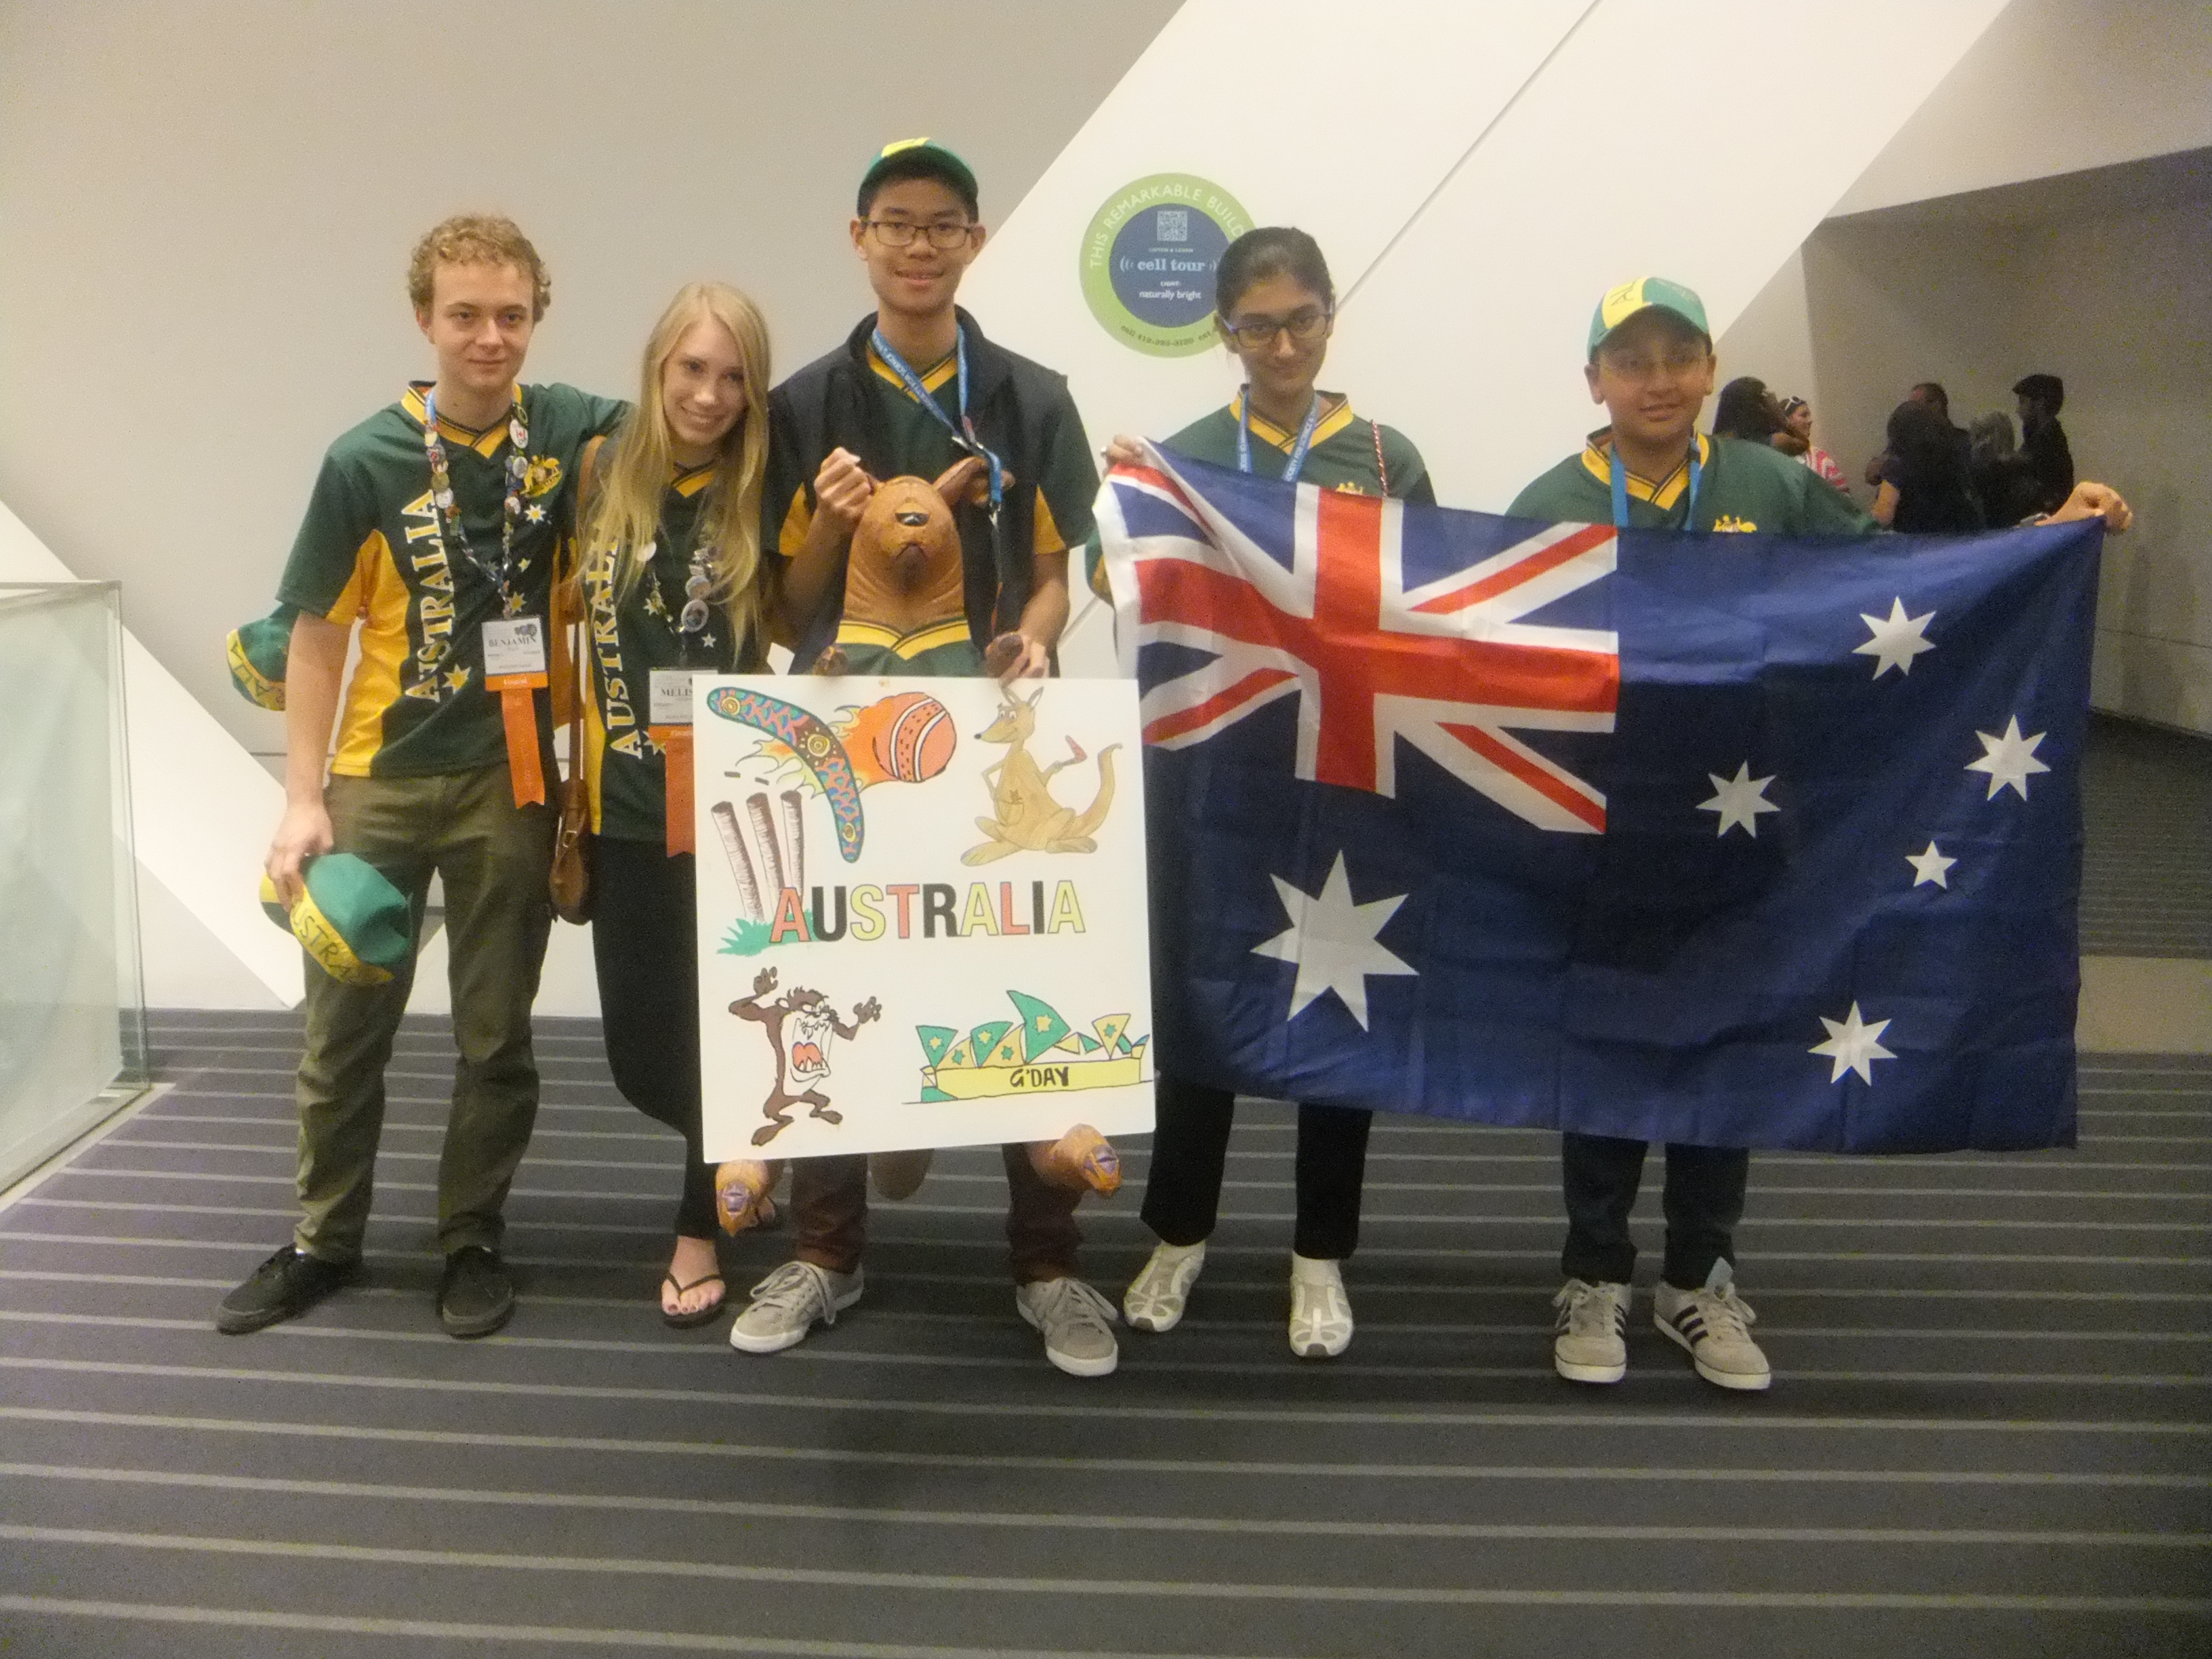 Five winners holding an inflatable kangaroo mascot.